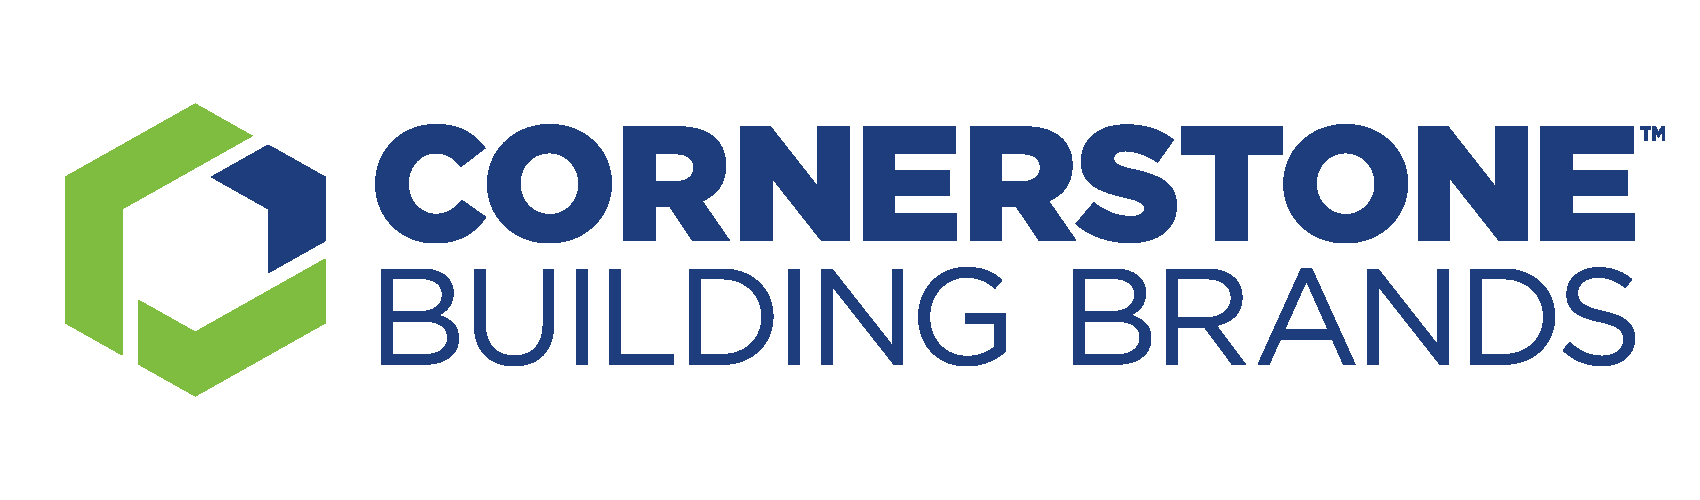 Cornerstone Building Brands